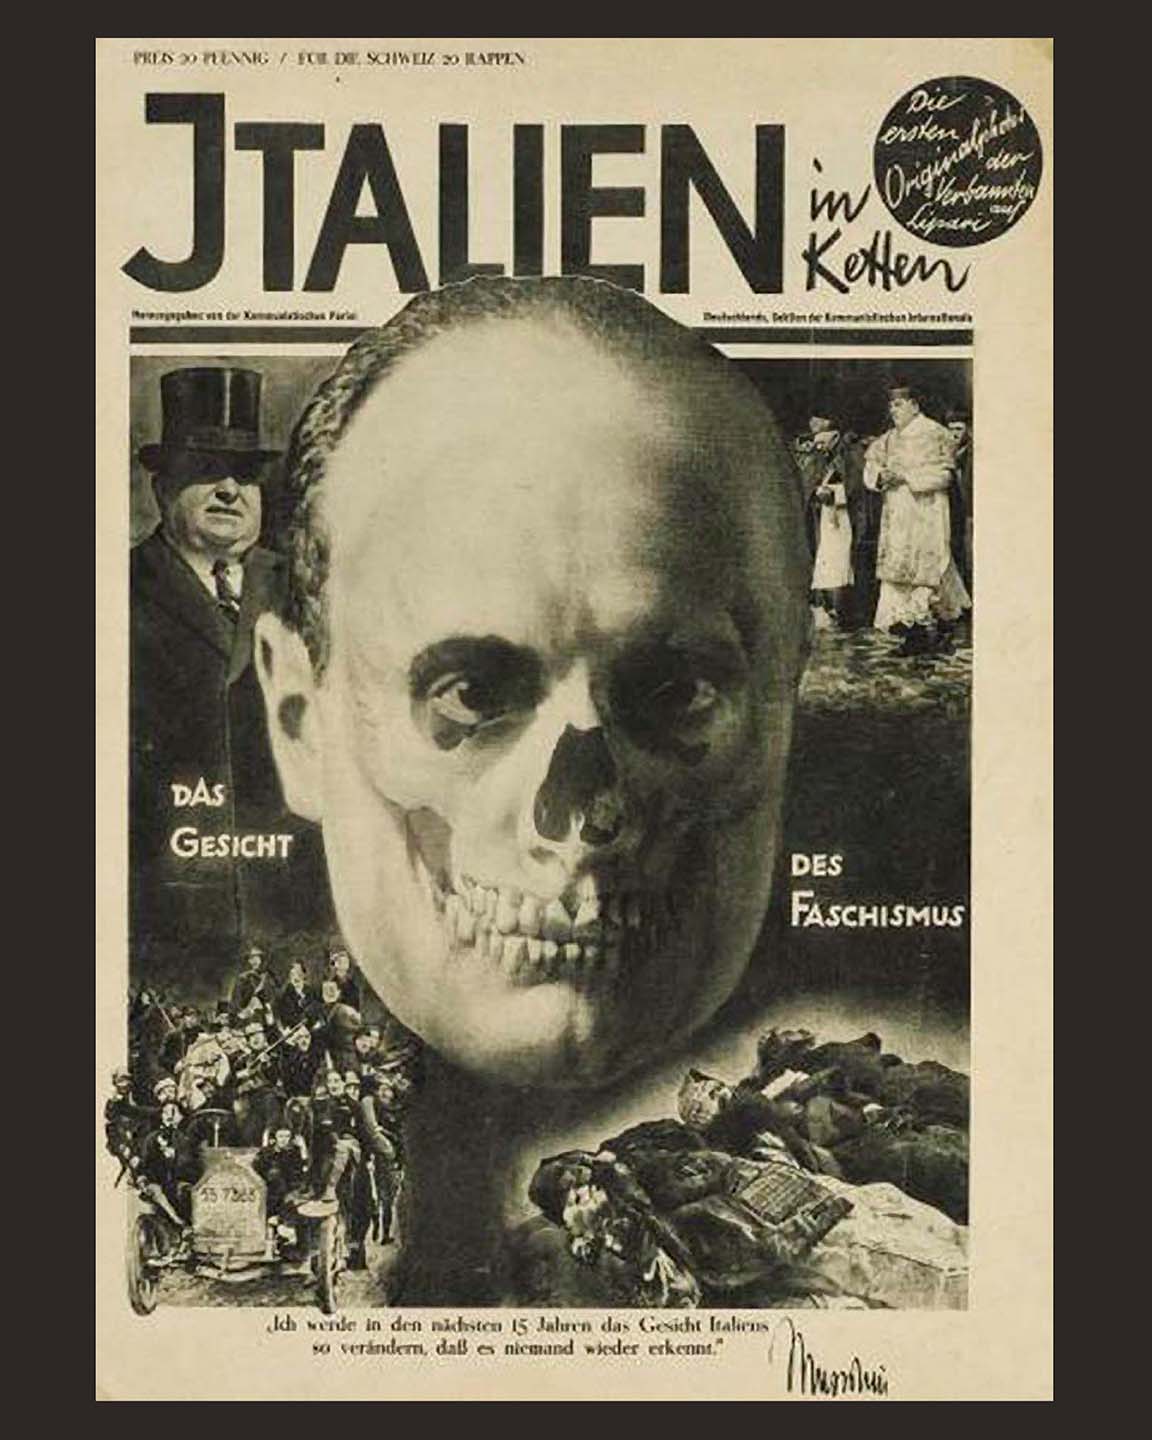 Buy Famous Antifascist Posters. John Heartfield "Face of Fascism" sale. Own a political masterpiece